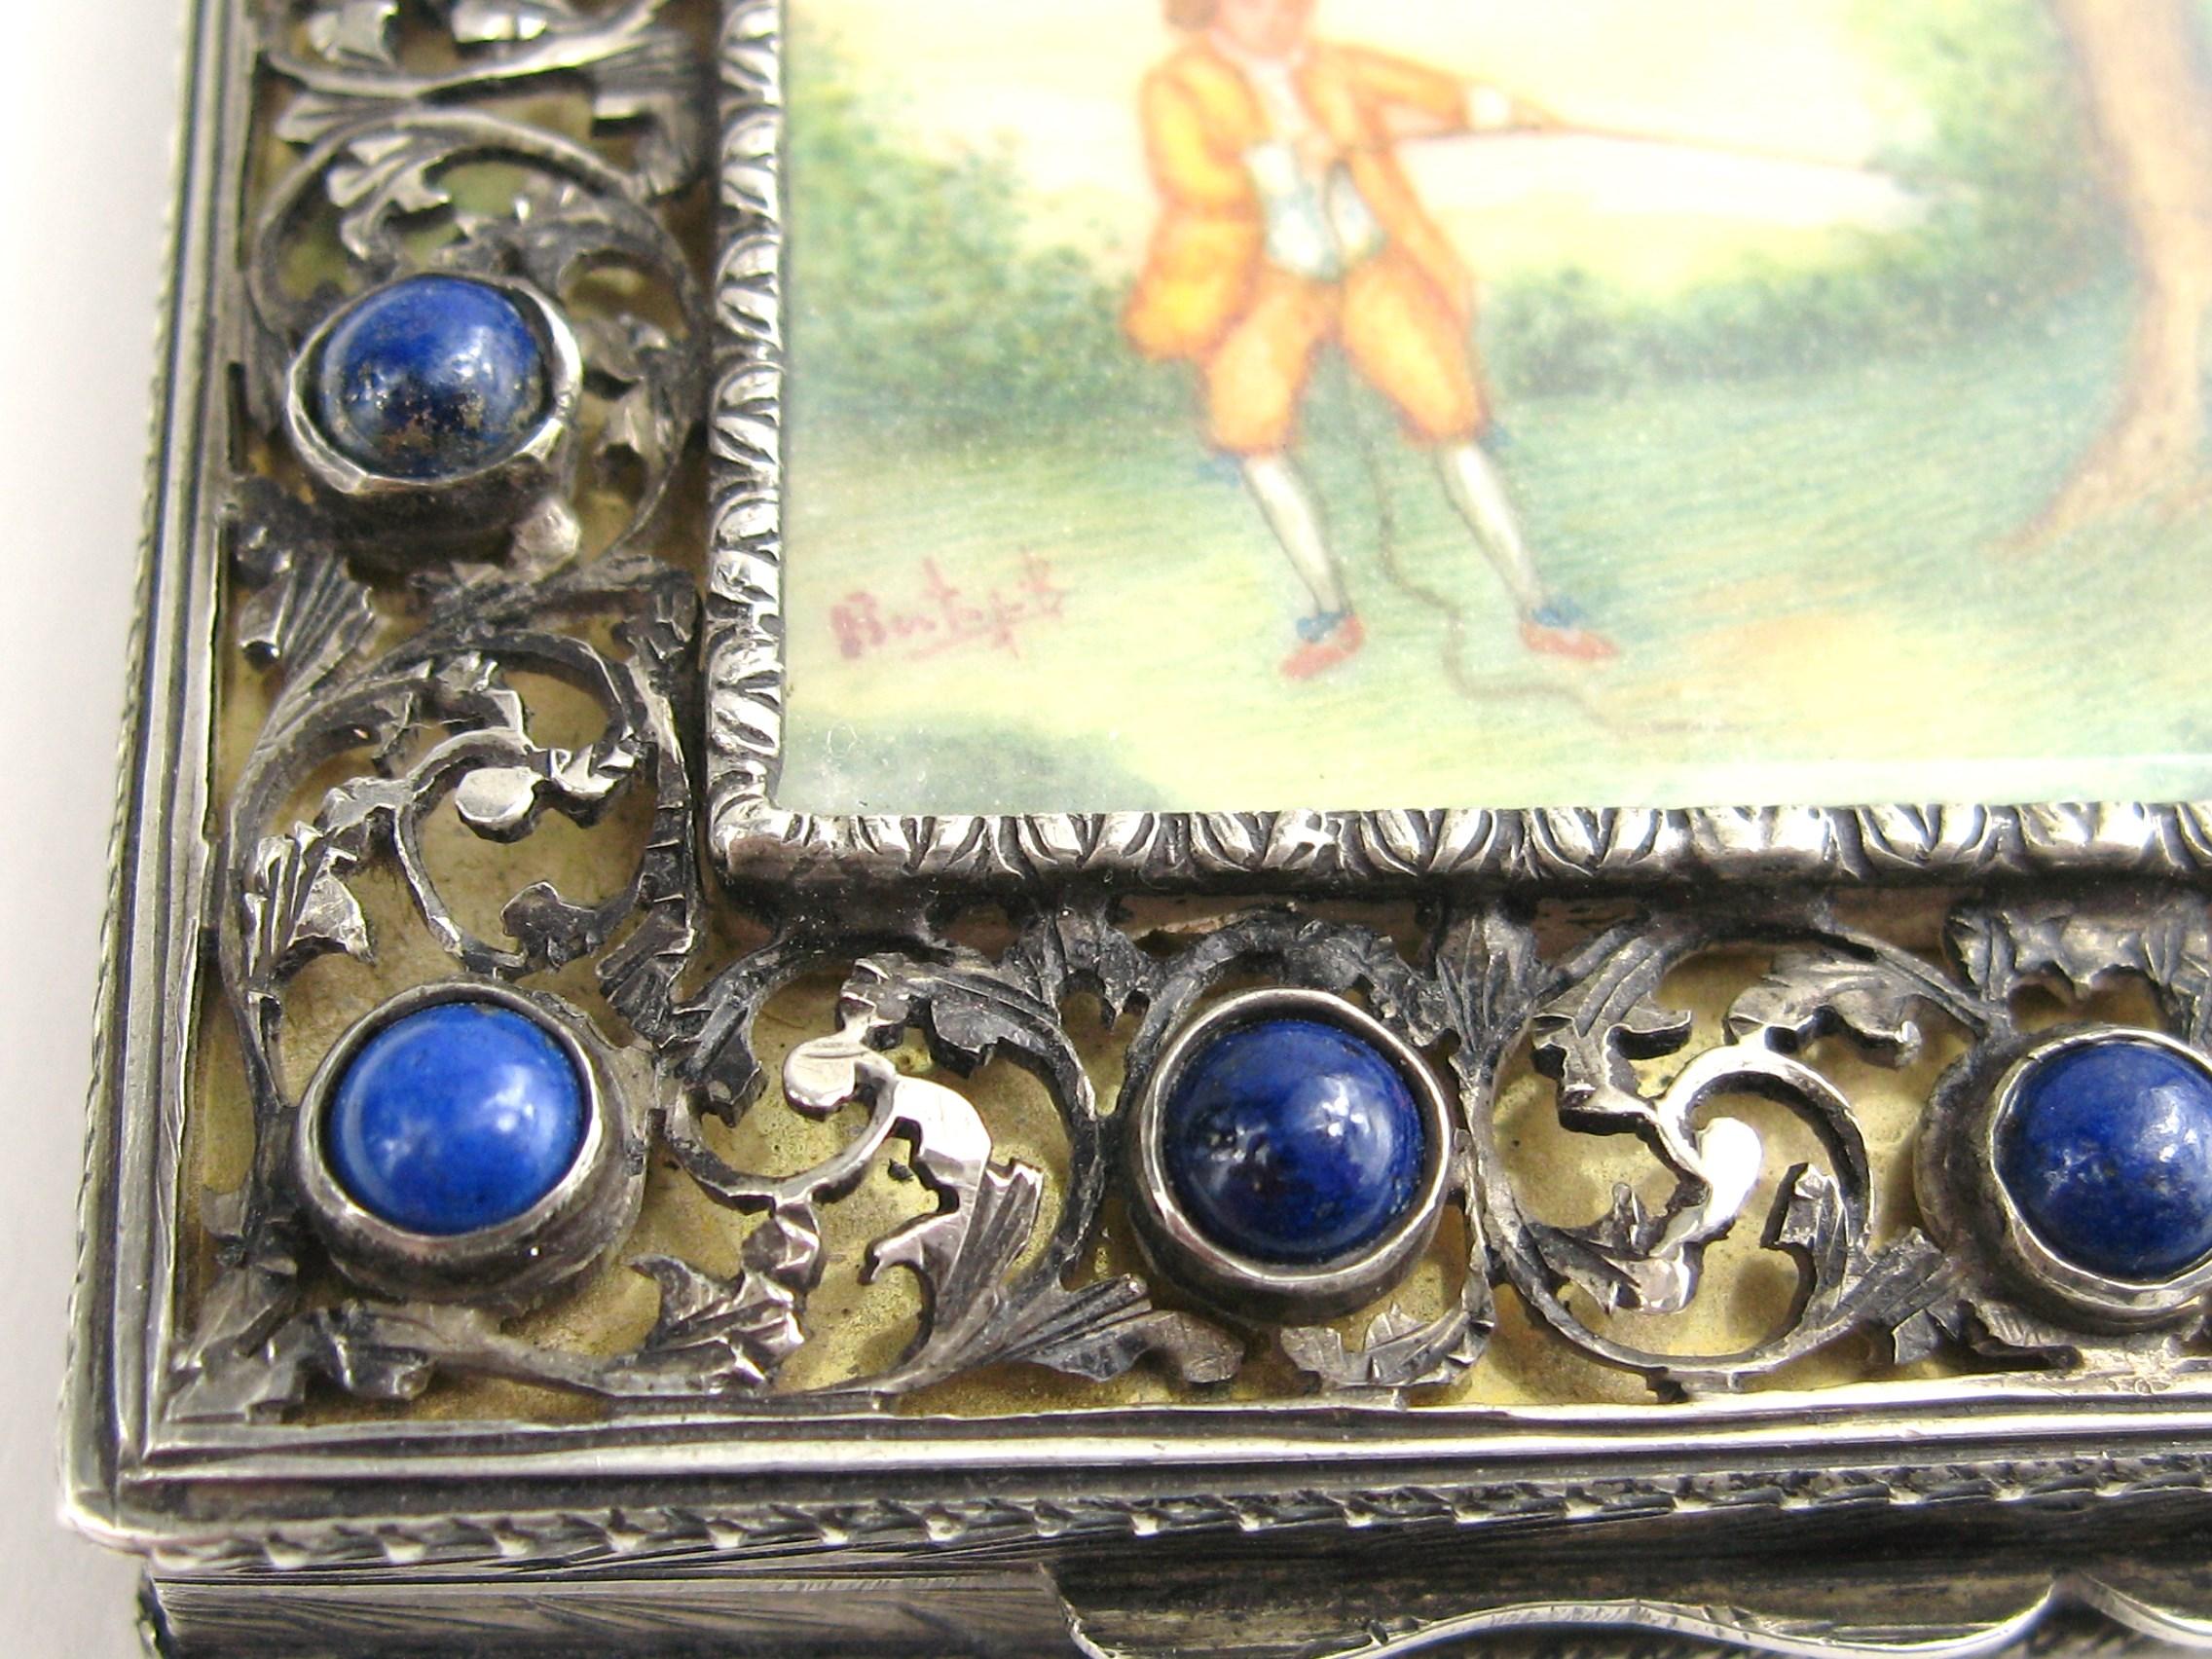  Silbernes Silber Kompaktsilber mit Lapislazuli, handbemalte Miniaturszene (Art nouveau) im Angebot